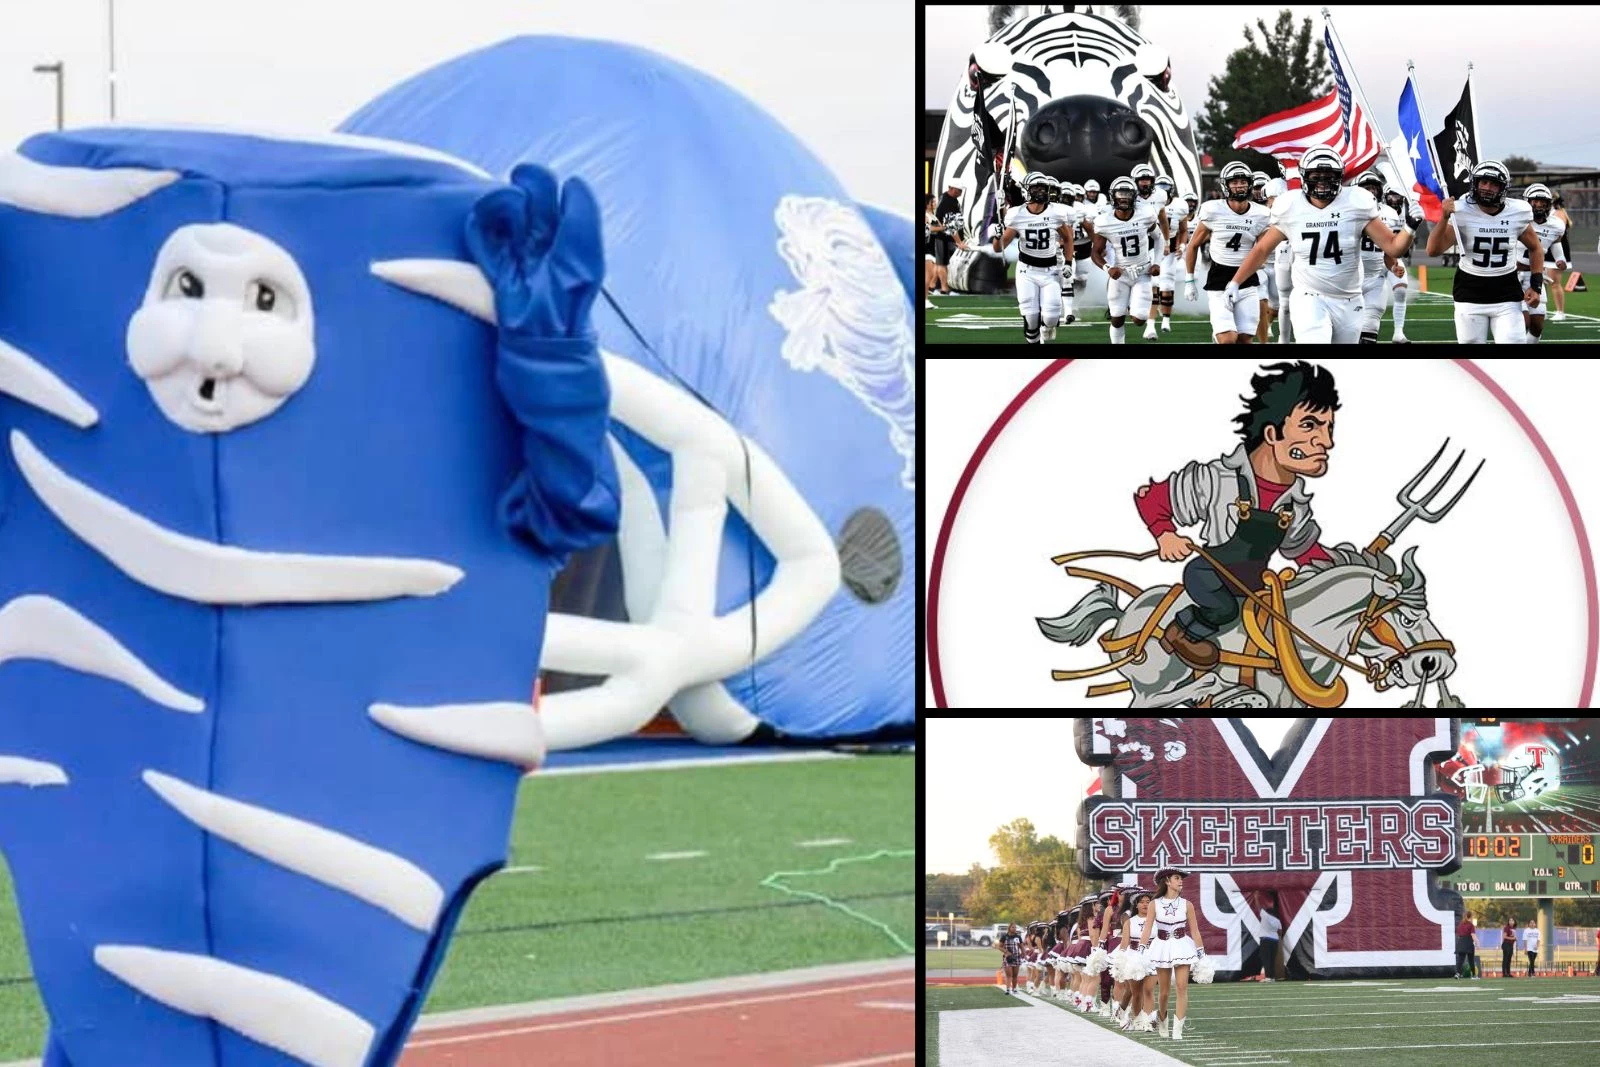 San Antonio-area high school mascots